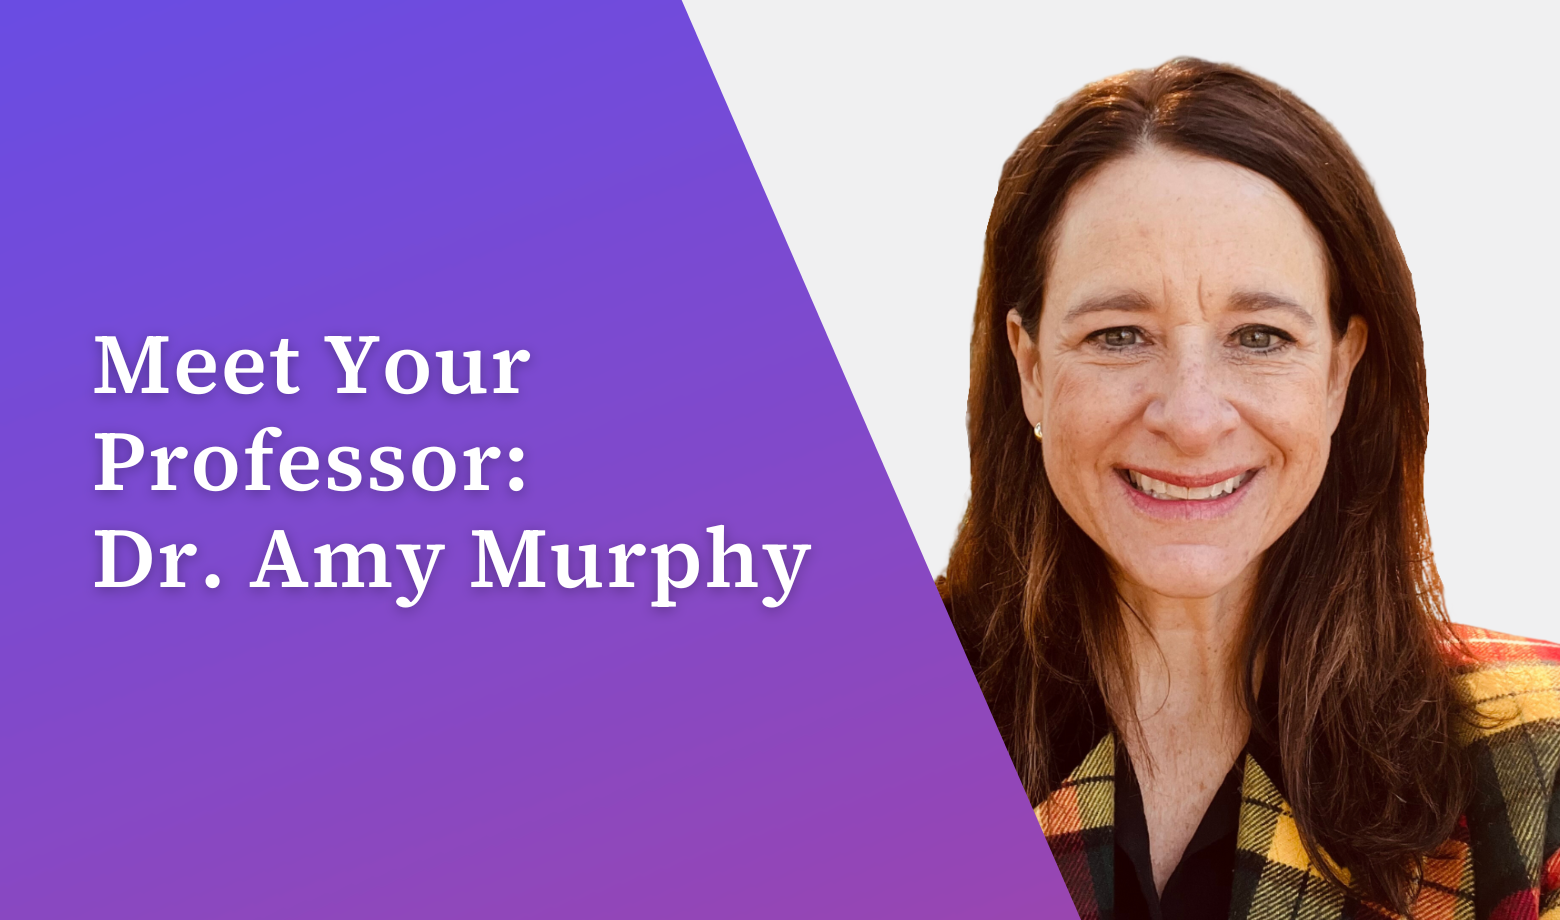 Meet Your Professor: Dr. Amy Murphy